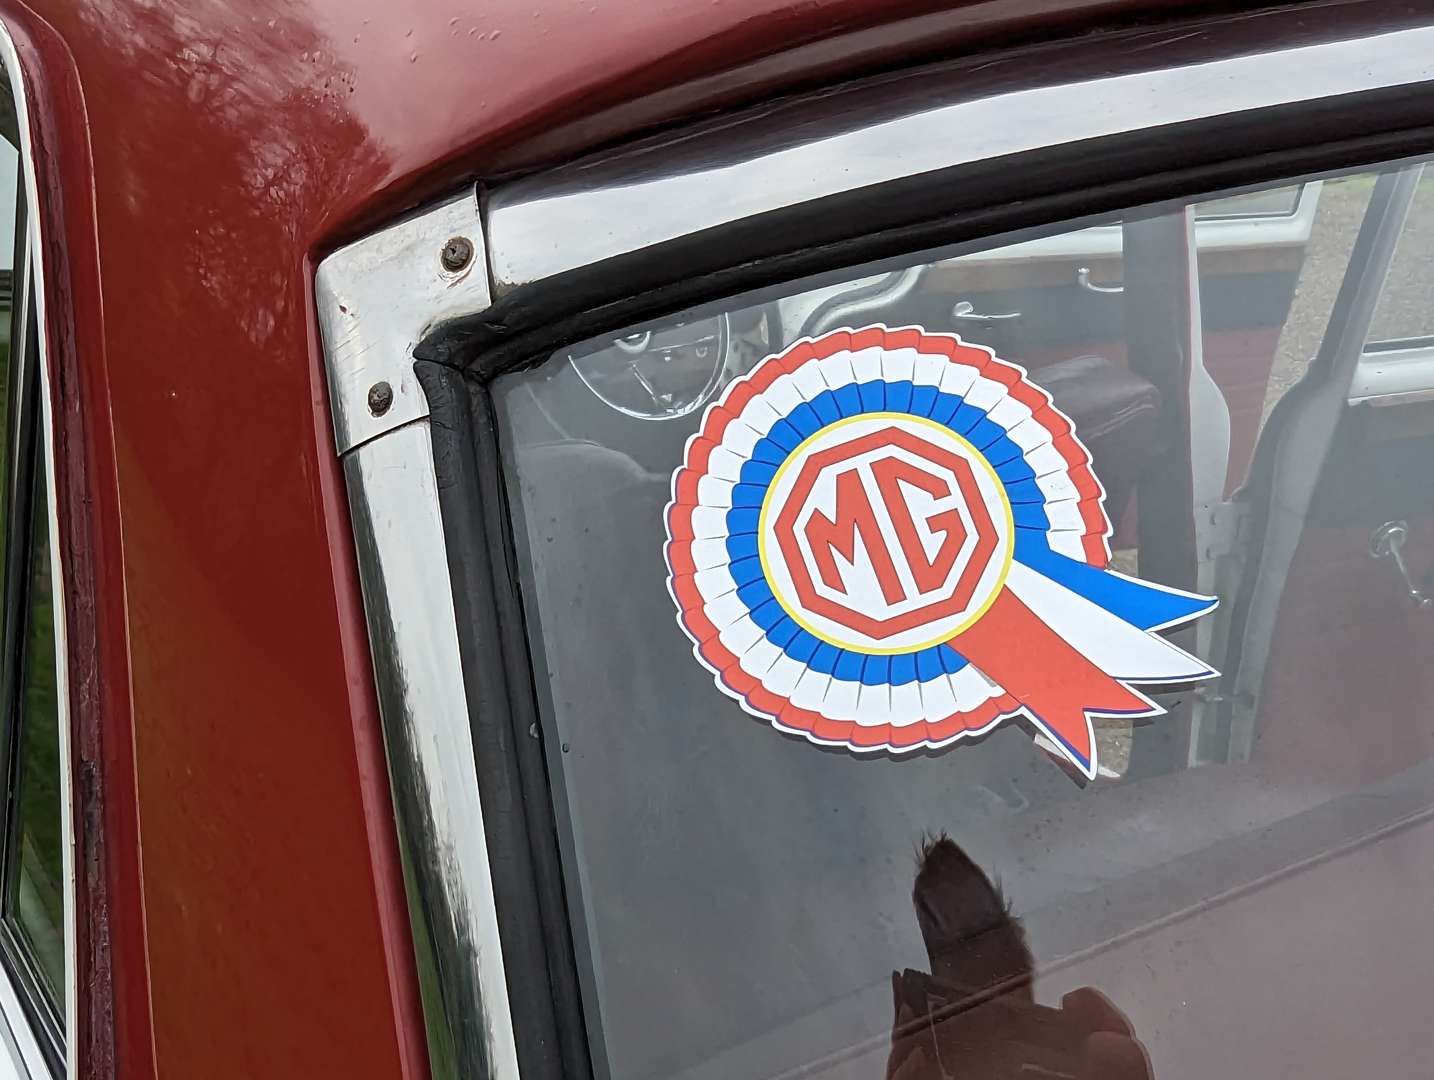 <p>1959 MG MAGNETTE MKIII</p>